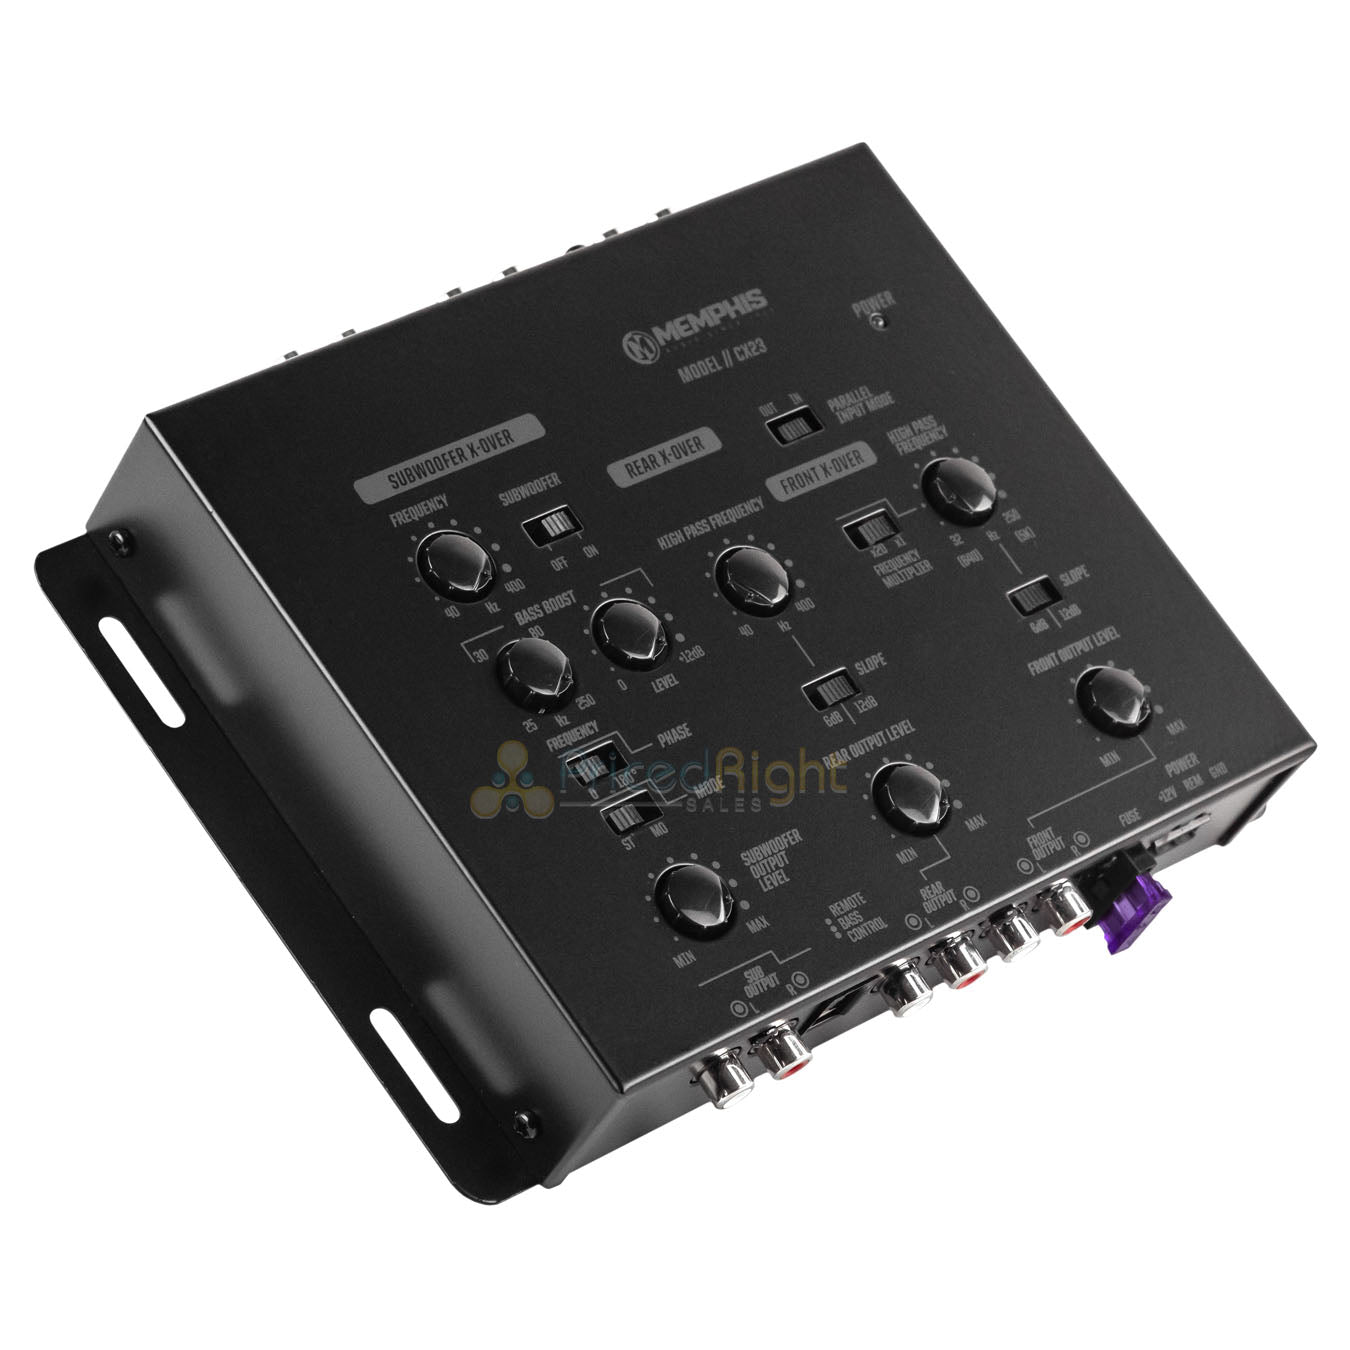 Memphis Audio 3 Way Electronic Crossover w Remote Level Control CX23 Processor